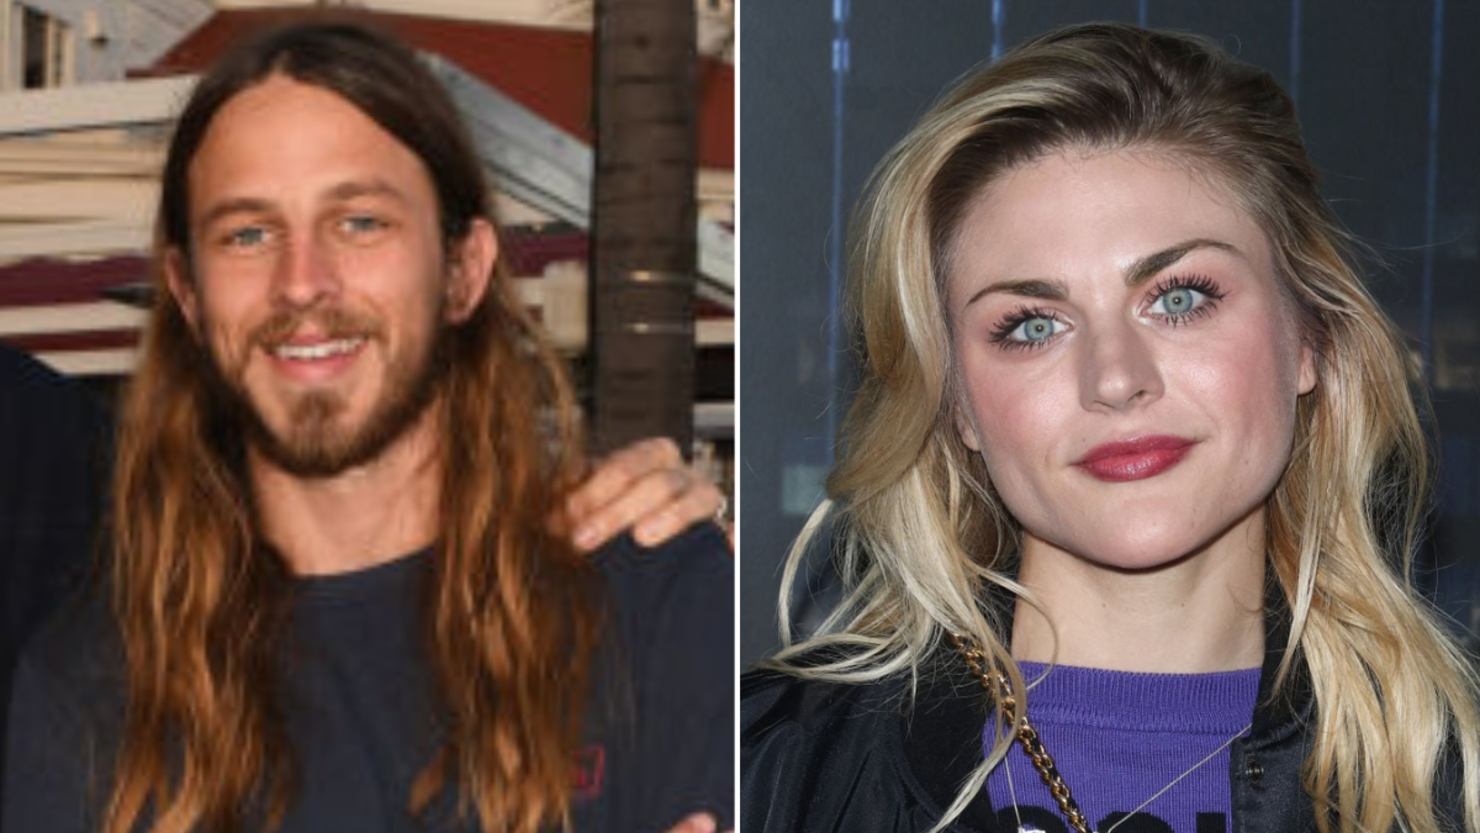 Kurt Cobain's daughter Frances marries Tony Hawk's son Riley